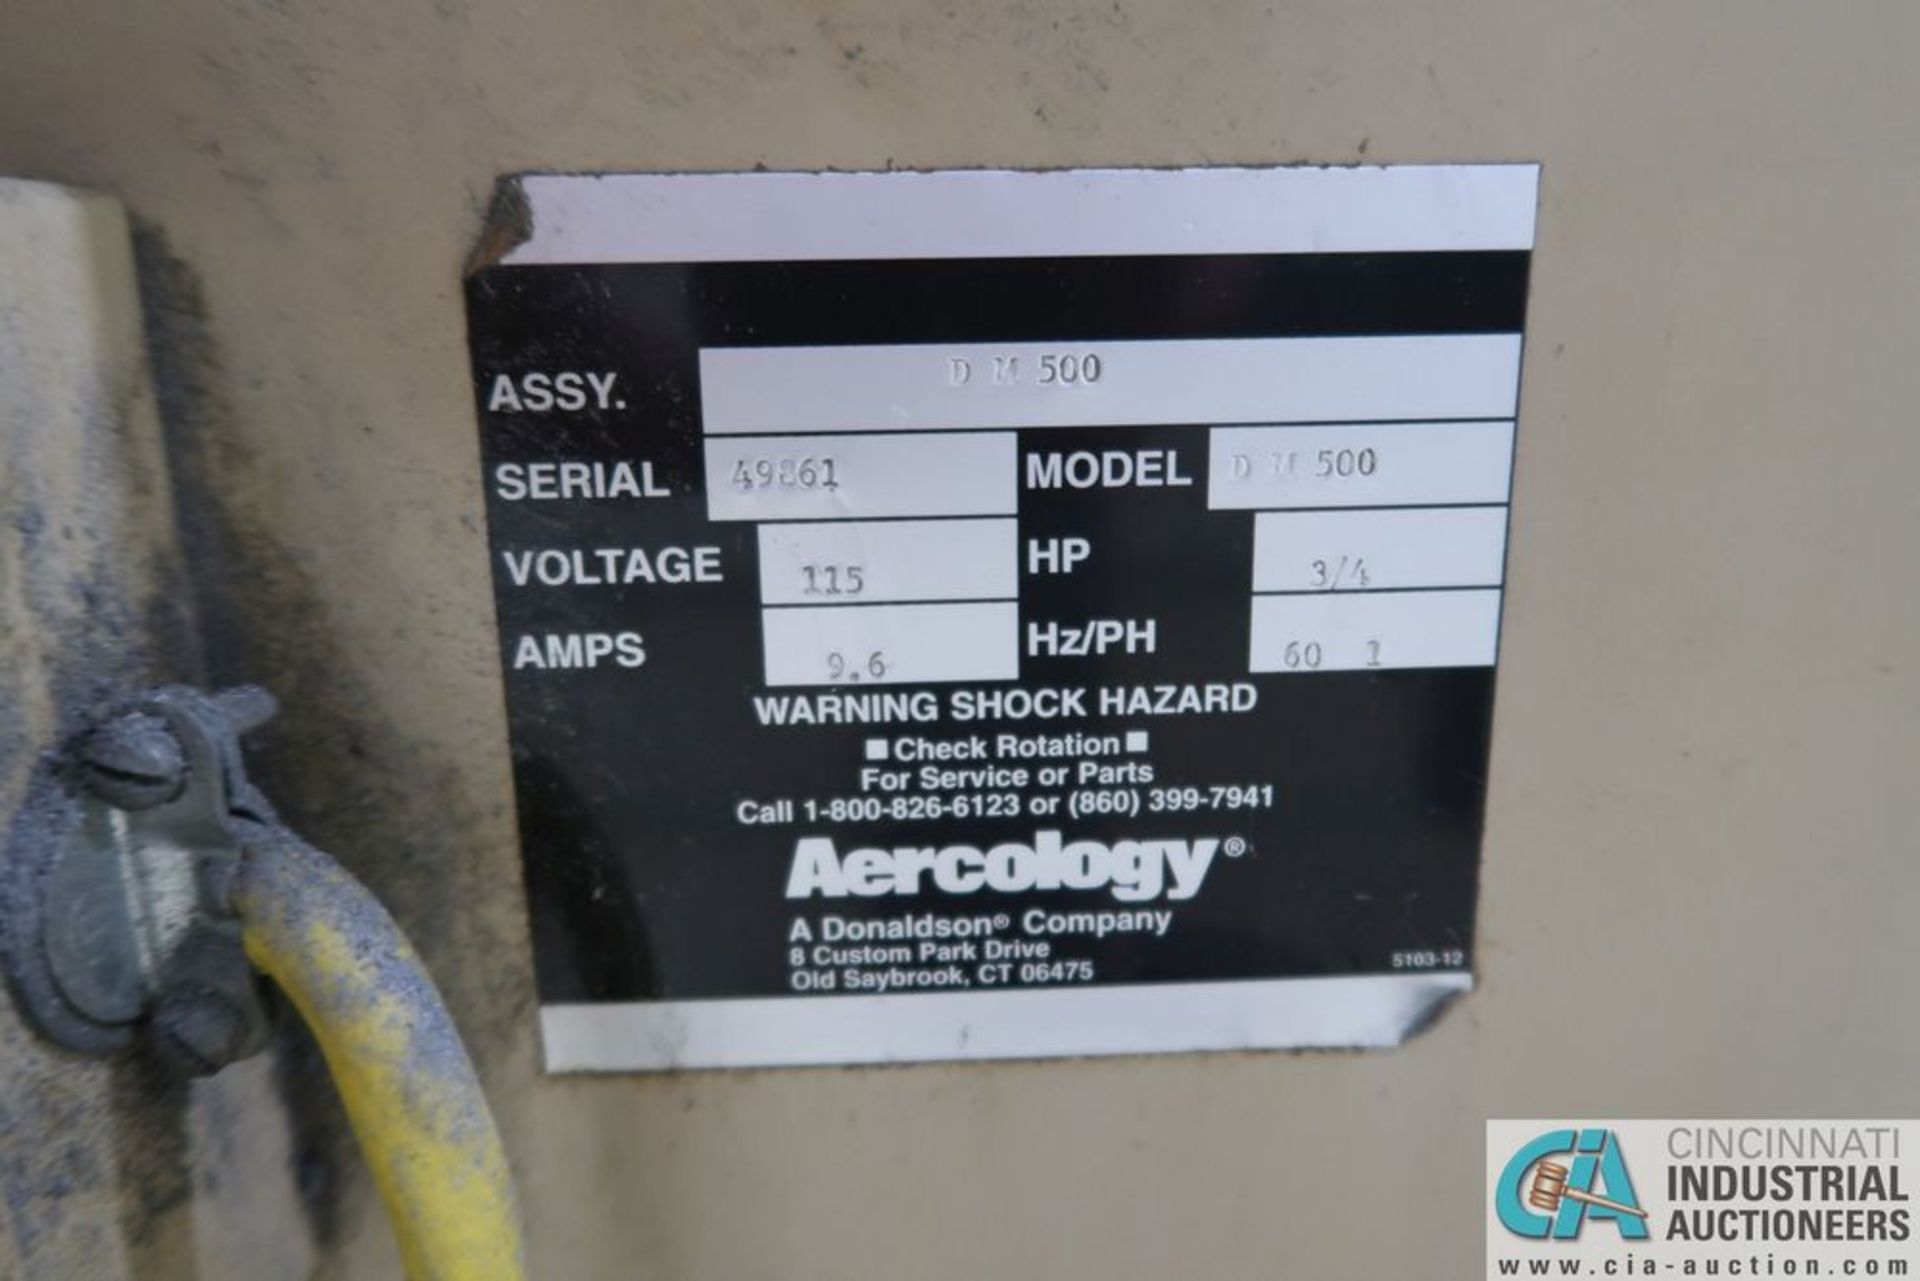 6" KALAMAZOO BELT SANDER WITH AERCOLOGY MODEL DM500 DUST COLLECTOR BASE, 1-1/2 HP - Image 4 of 4